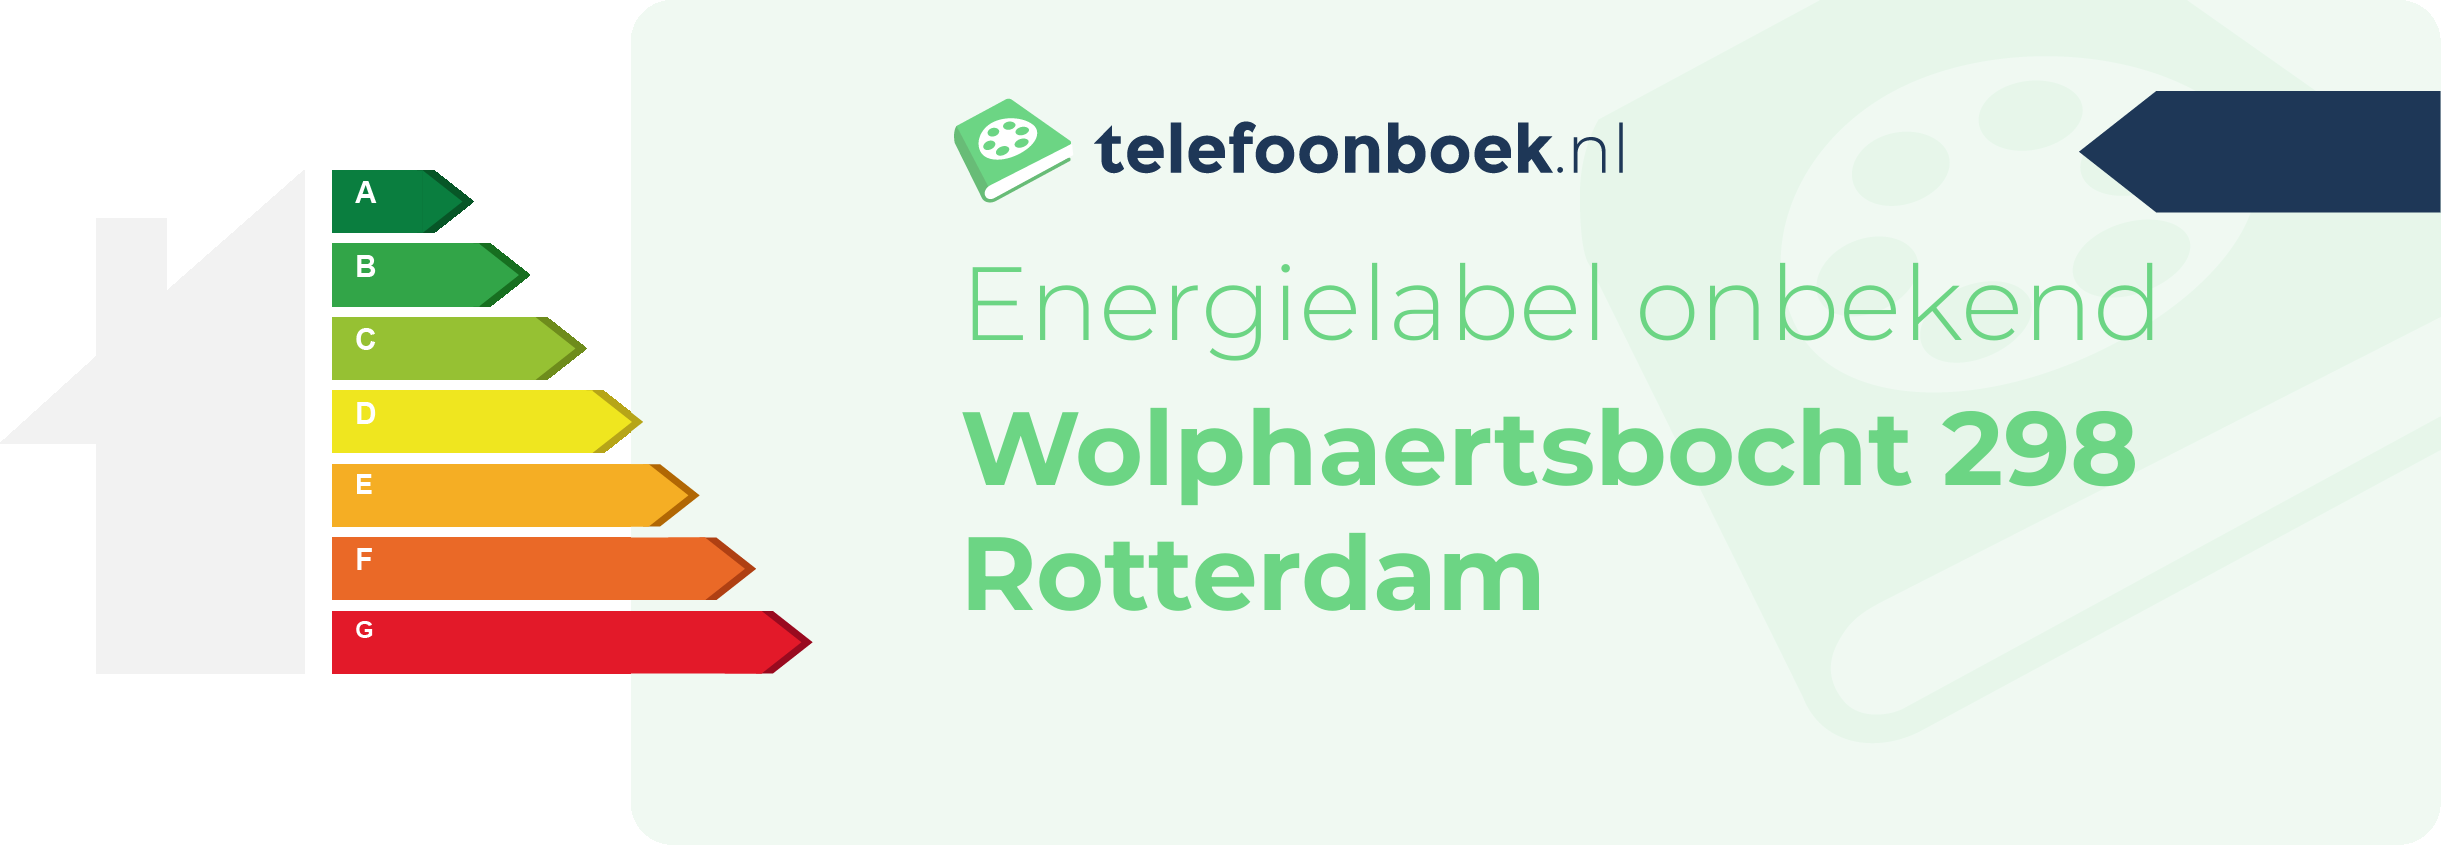 Energielabel Wolphaertsbocht 298 Rotterdam